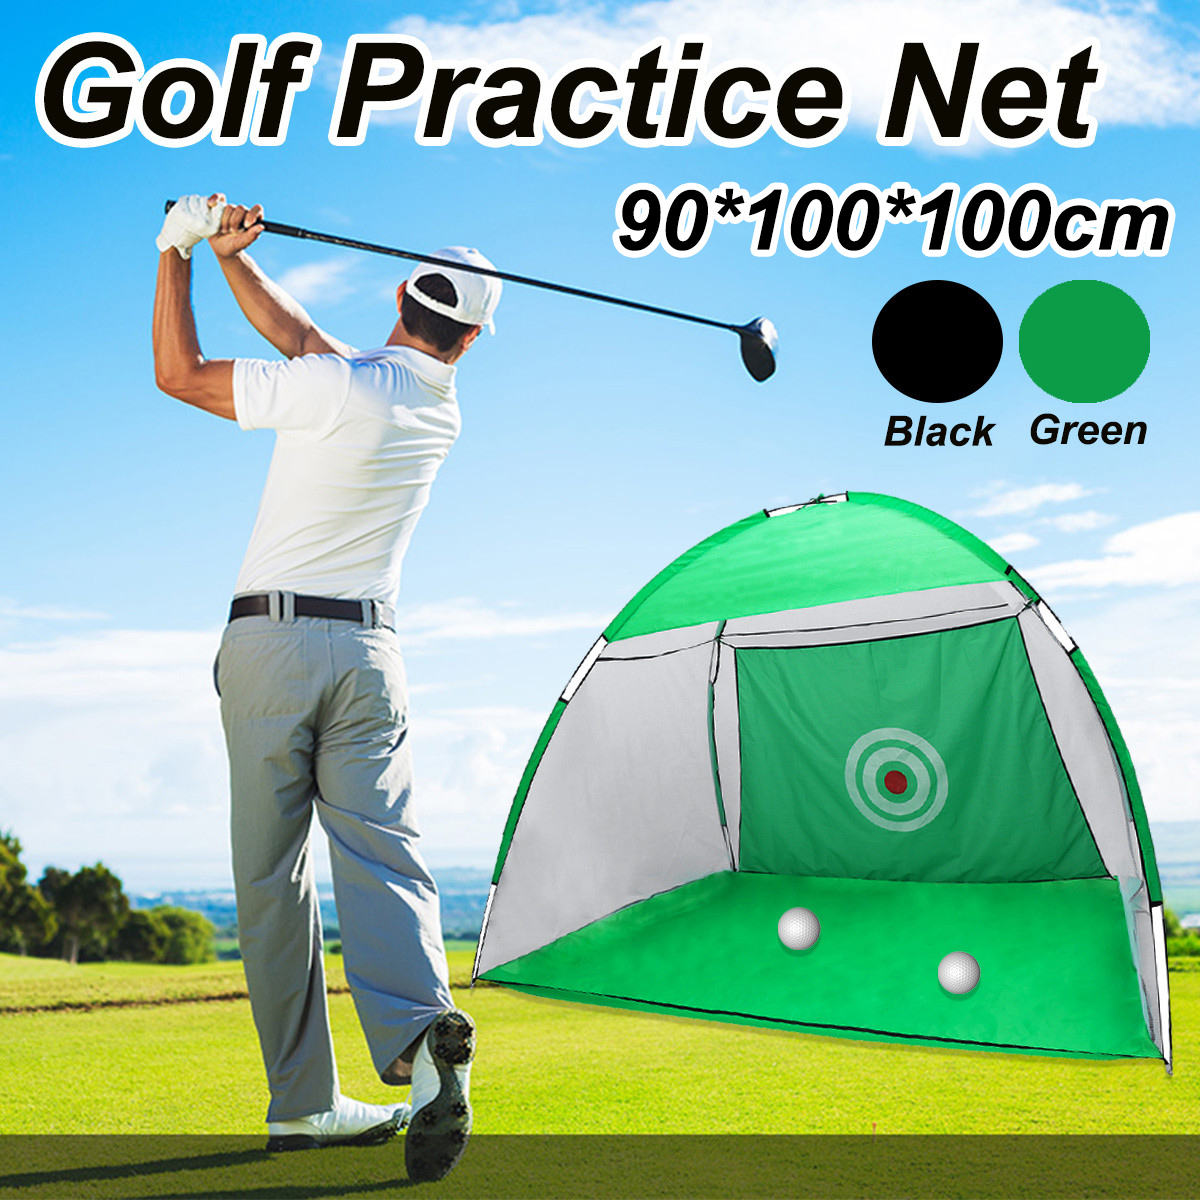 1m-Folding-Golf-Training-Net-Golf-Practice-Net-Aiming-Target-Golf-Accessories-1696443-1